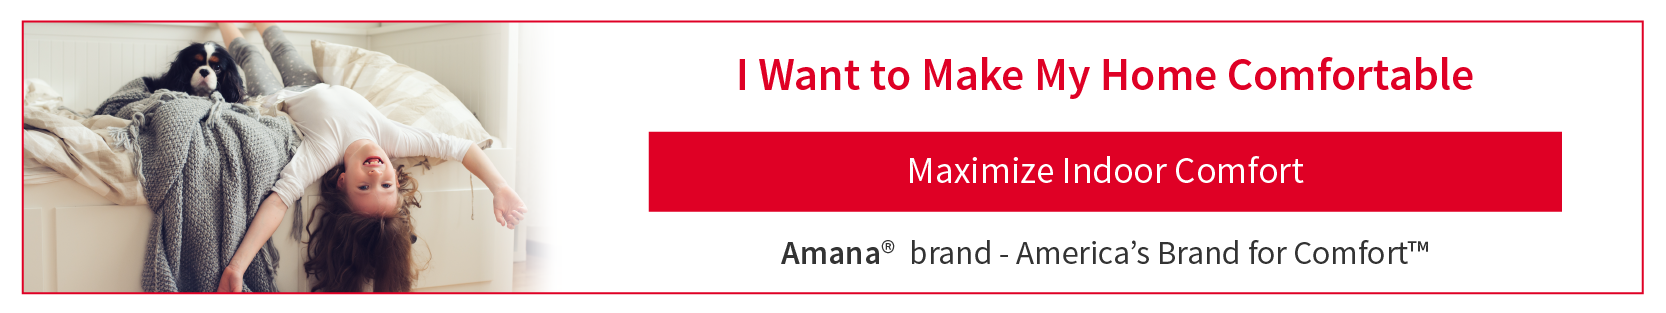 Home comfort with Amana brand